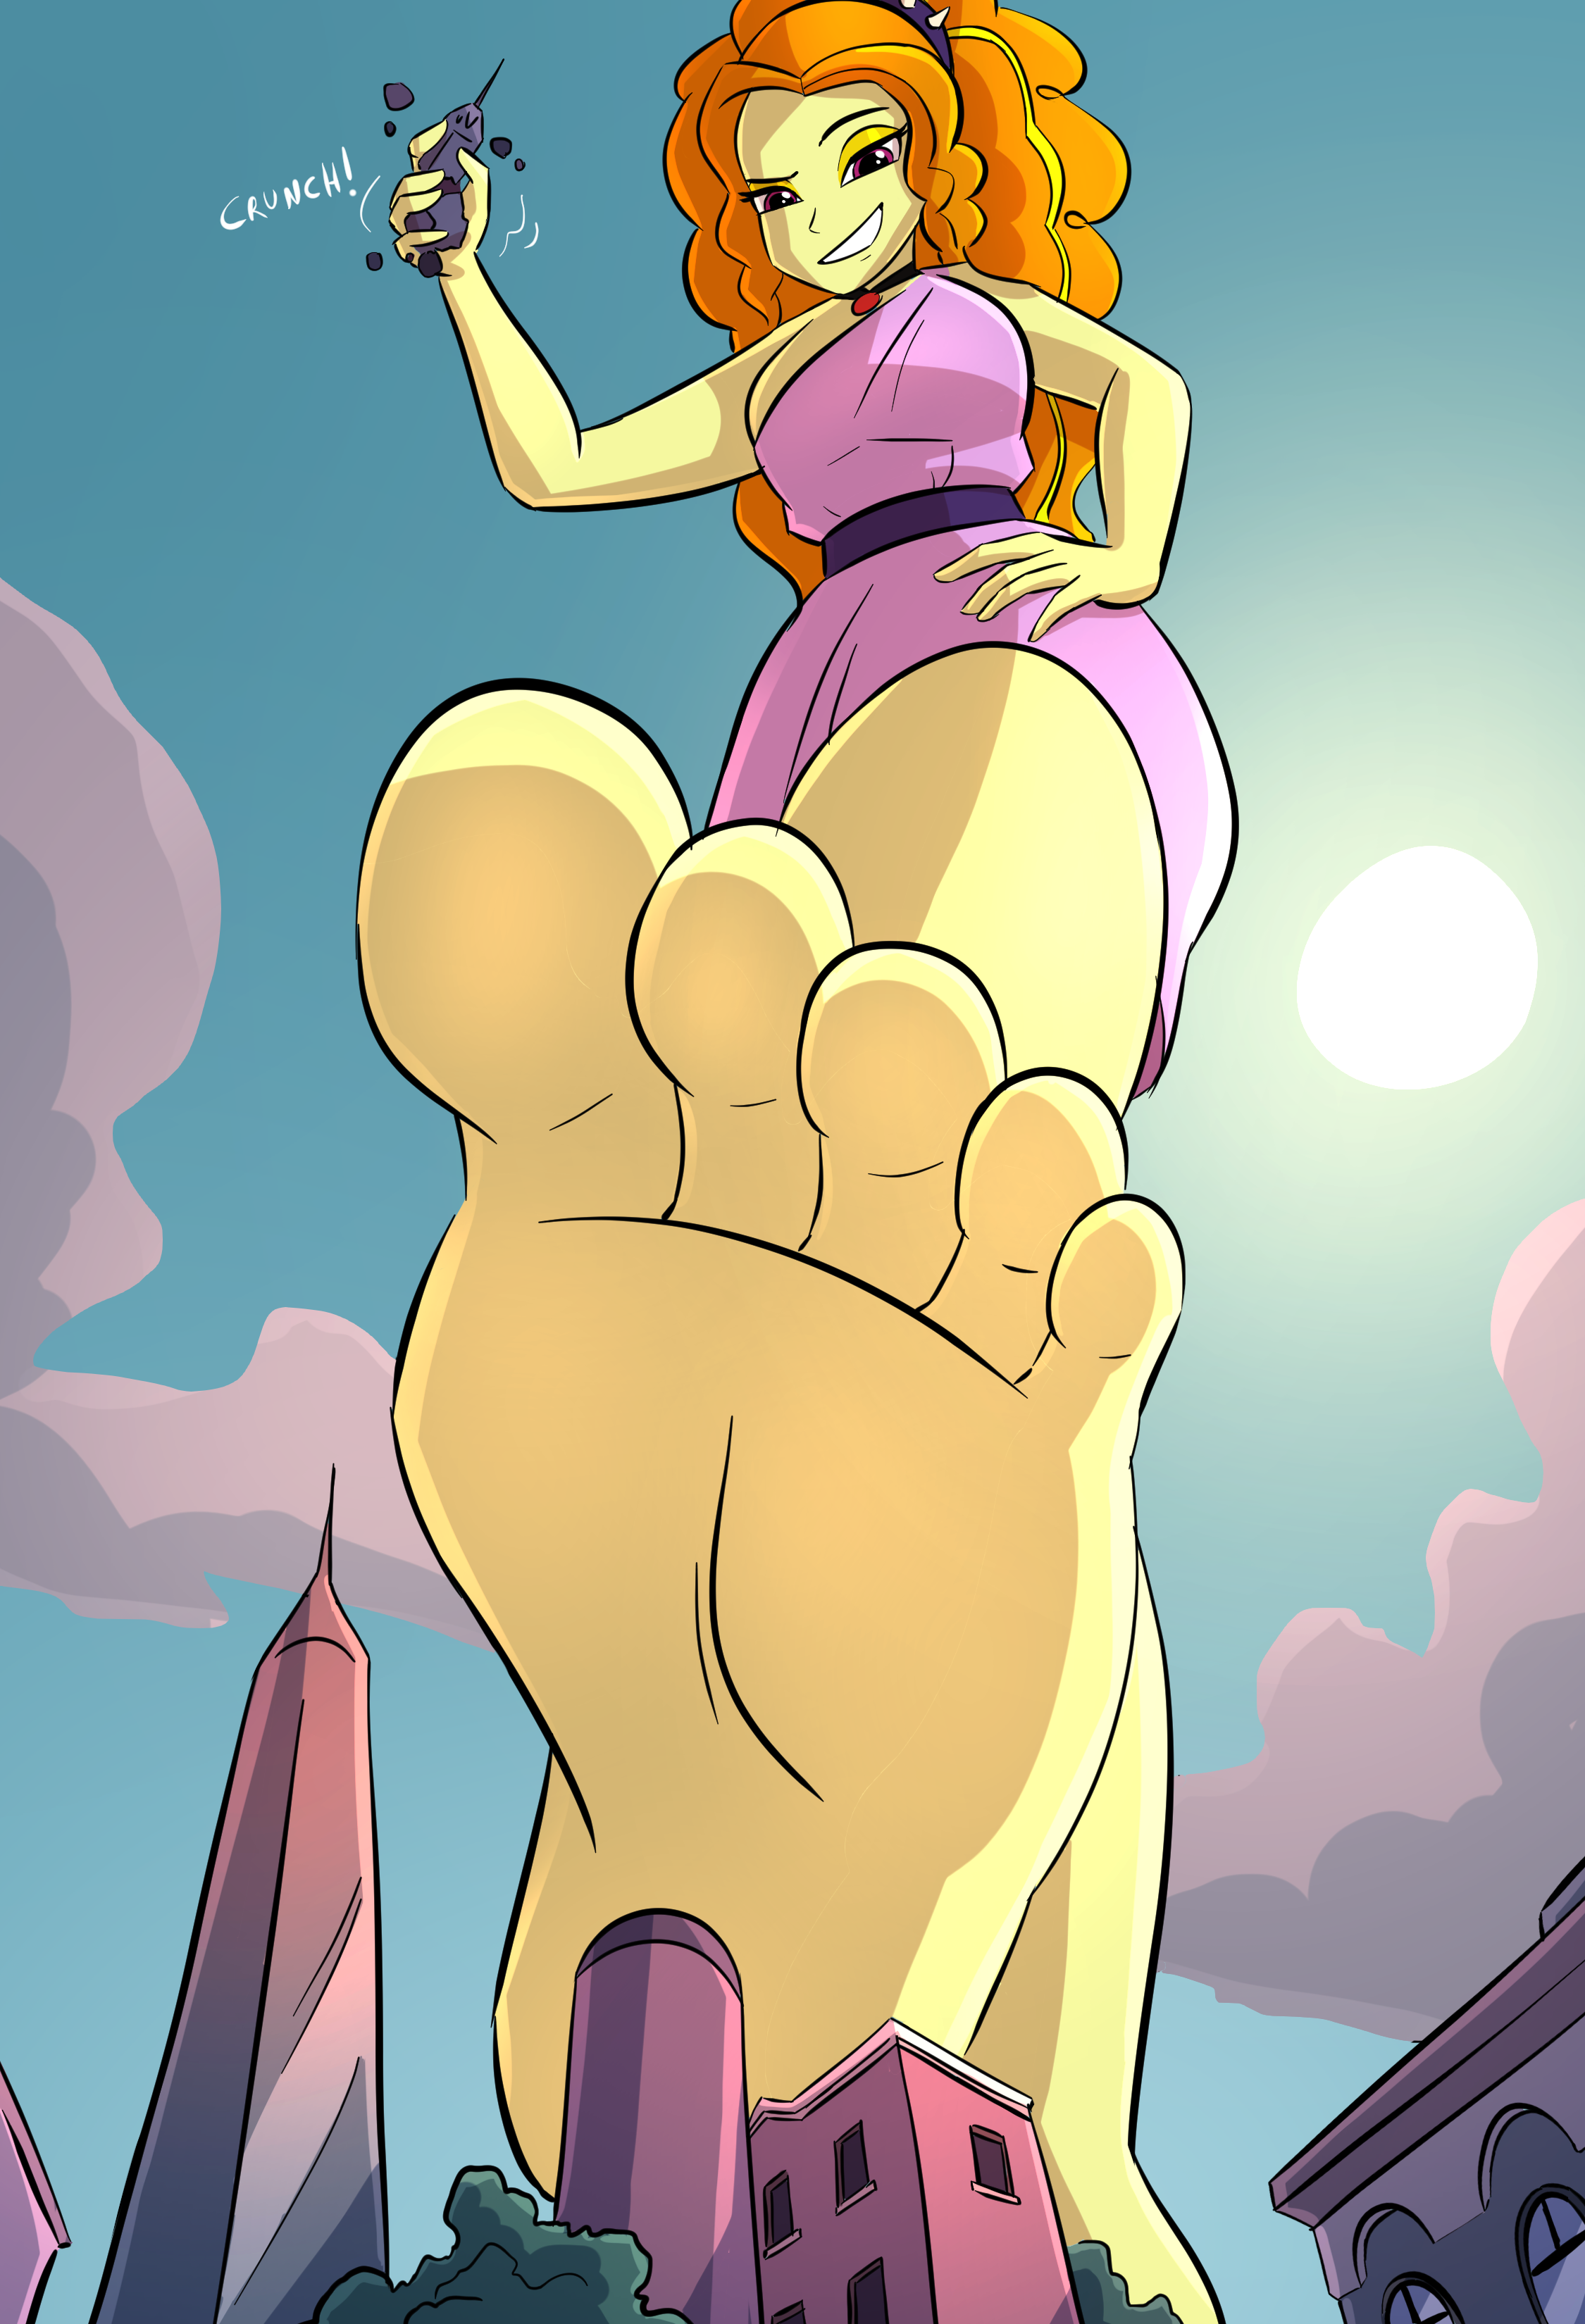 Giantess Feet